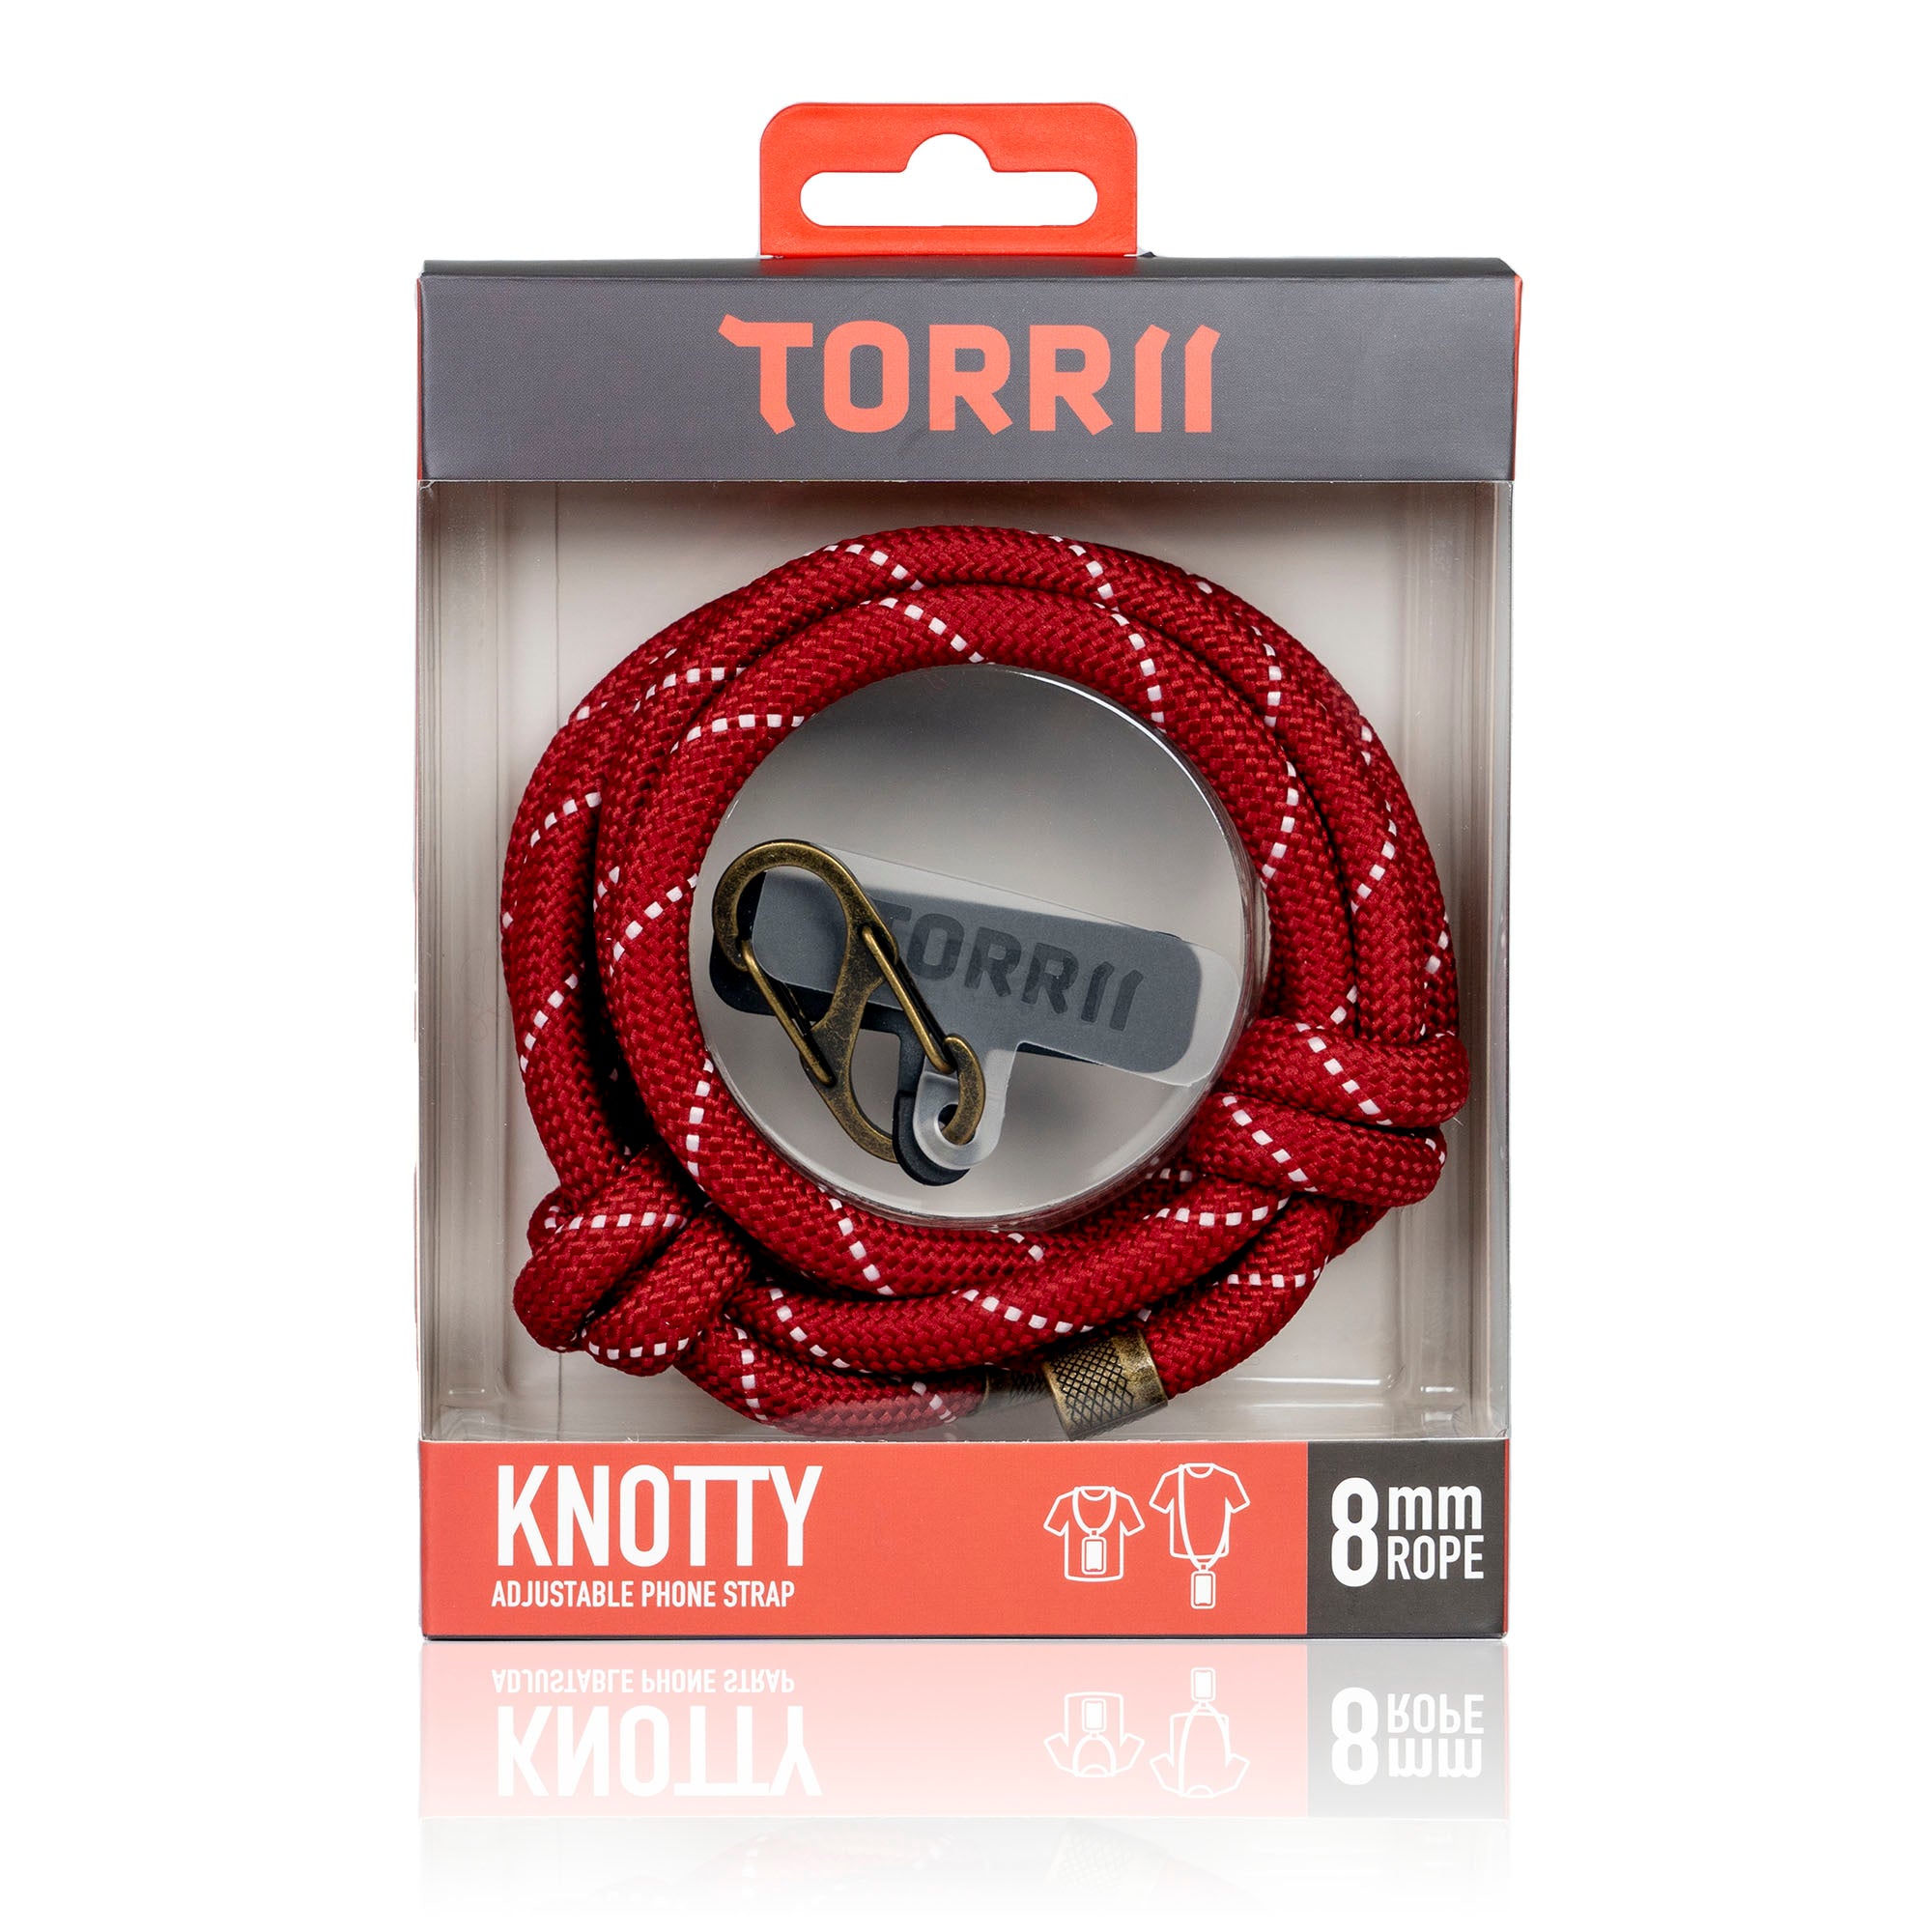 Torrii Knotty 8mm Strap - Raspberry